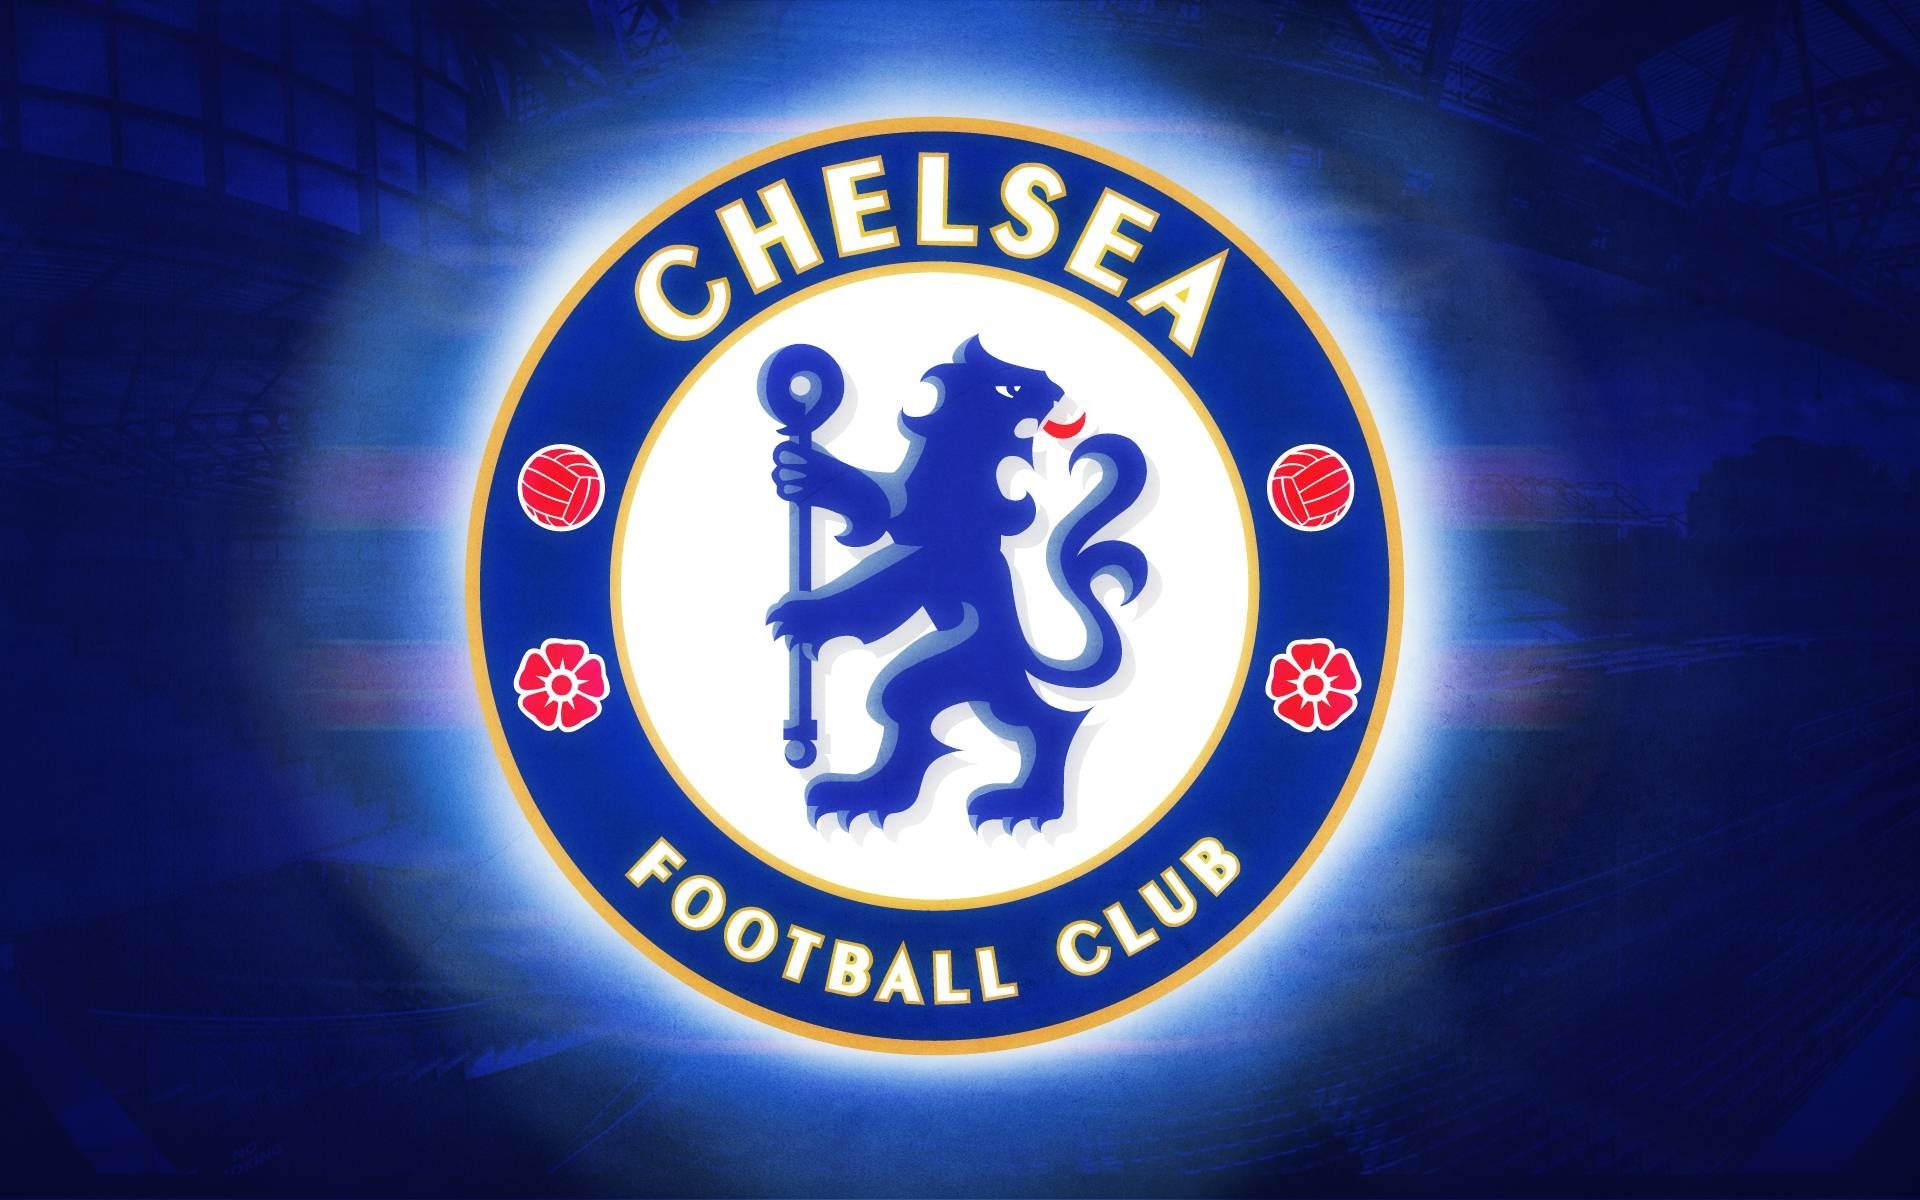 1920x1200  Chelsea Football Club Logo Wallpaper Download #8644 Wallpaper .